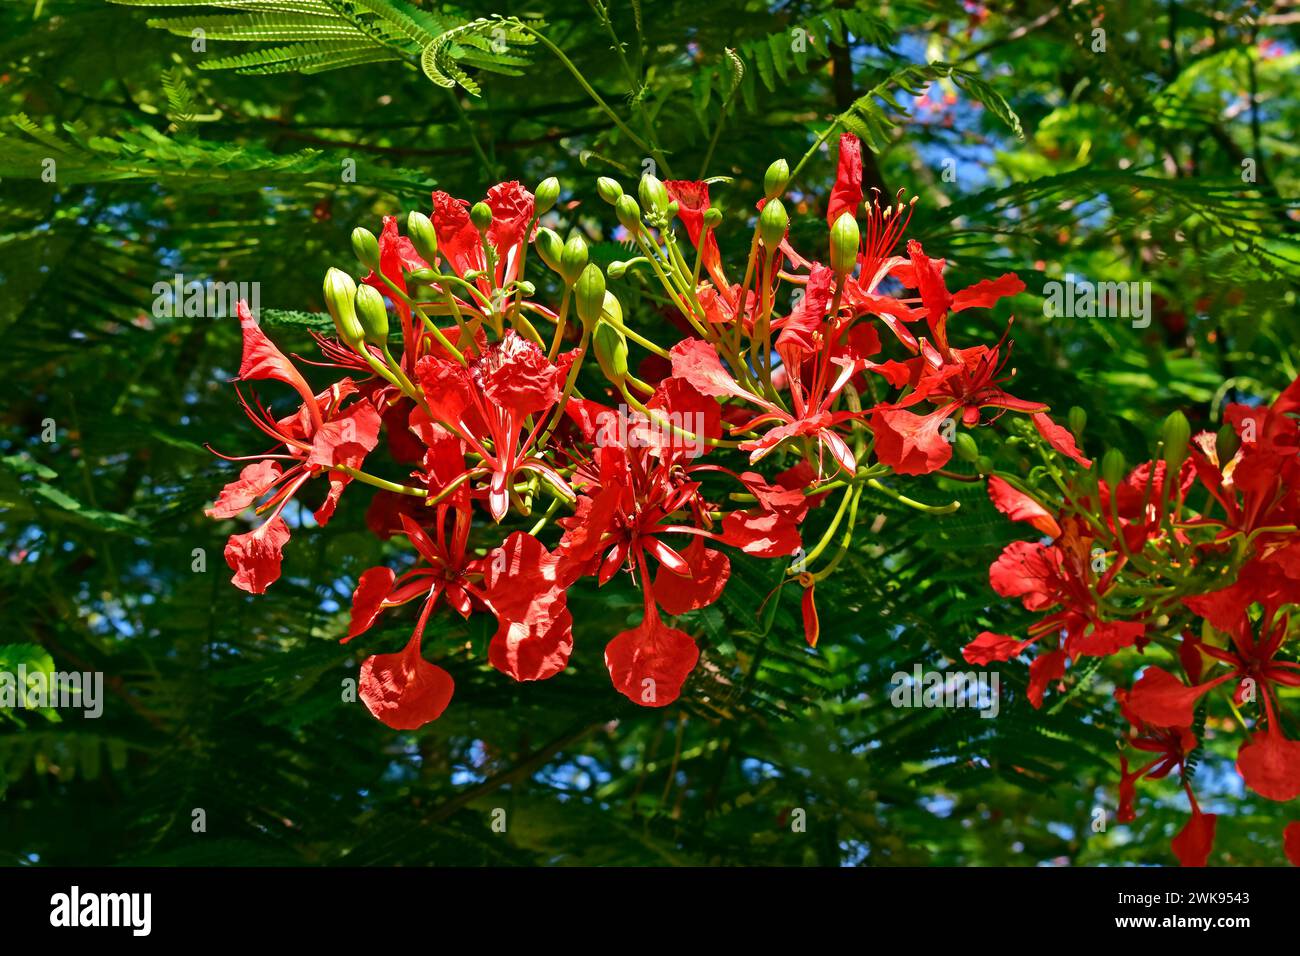 Royal poinciana, flamboyant or flame tree flowers (Delonix regia) Stock Photo